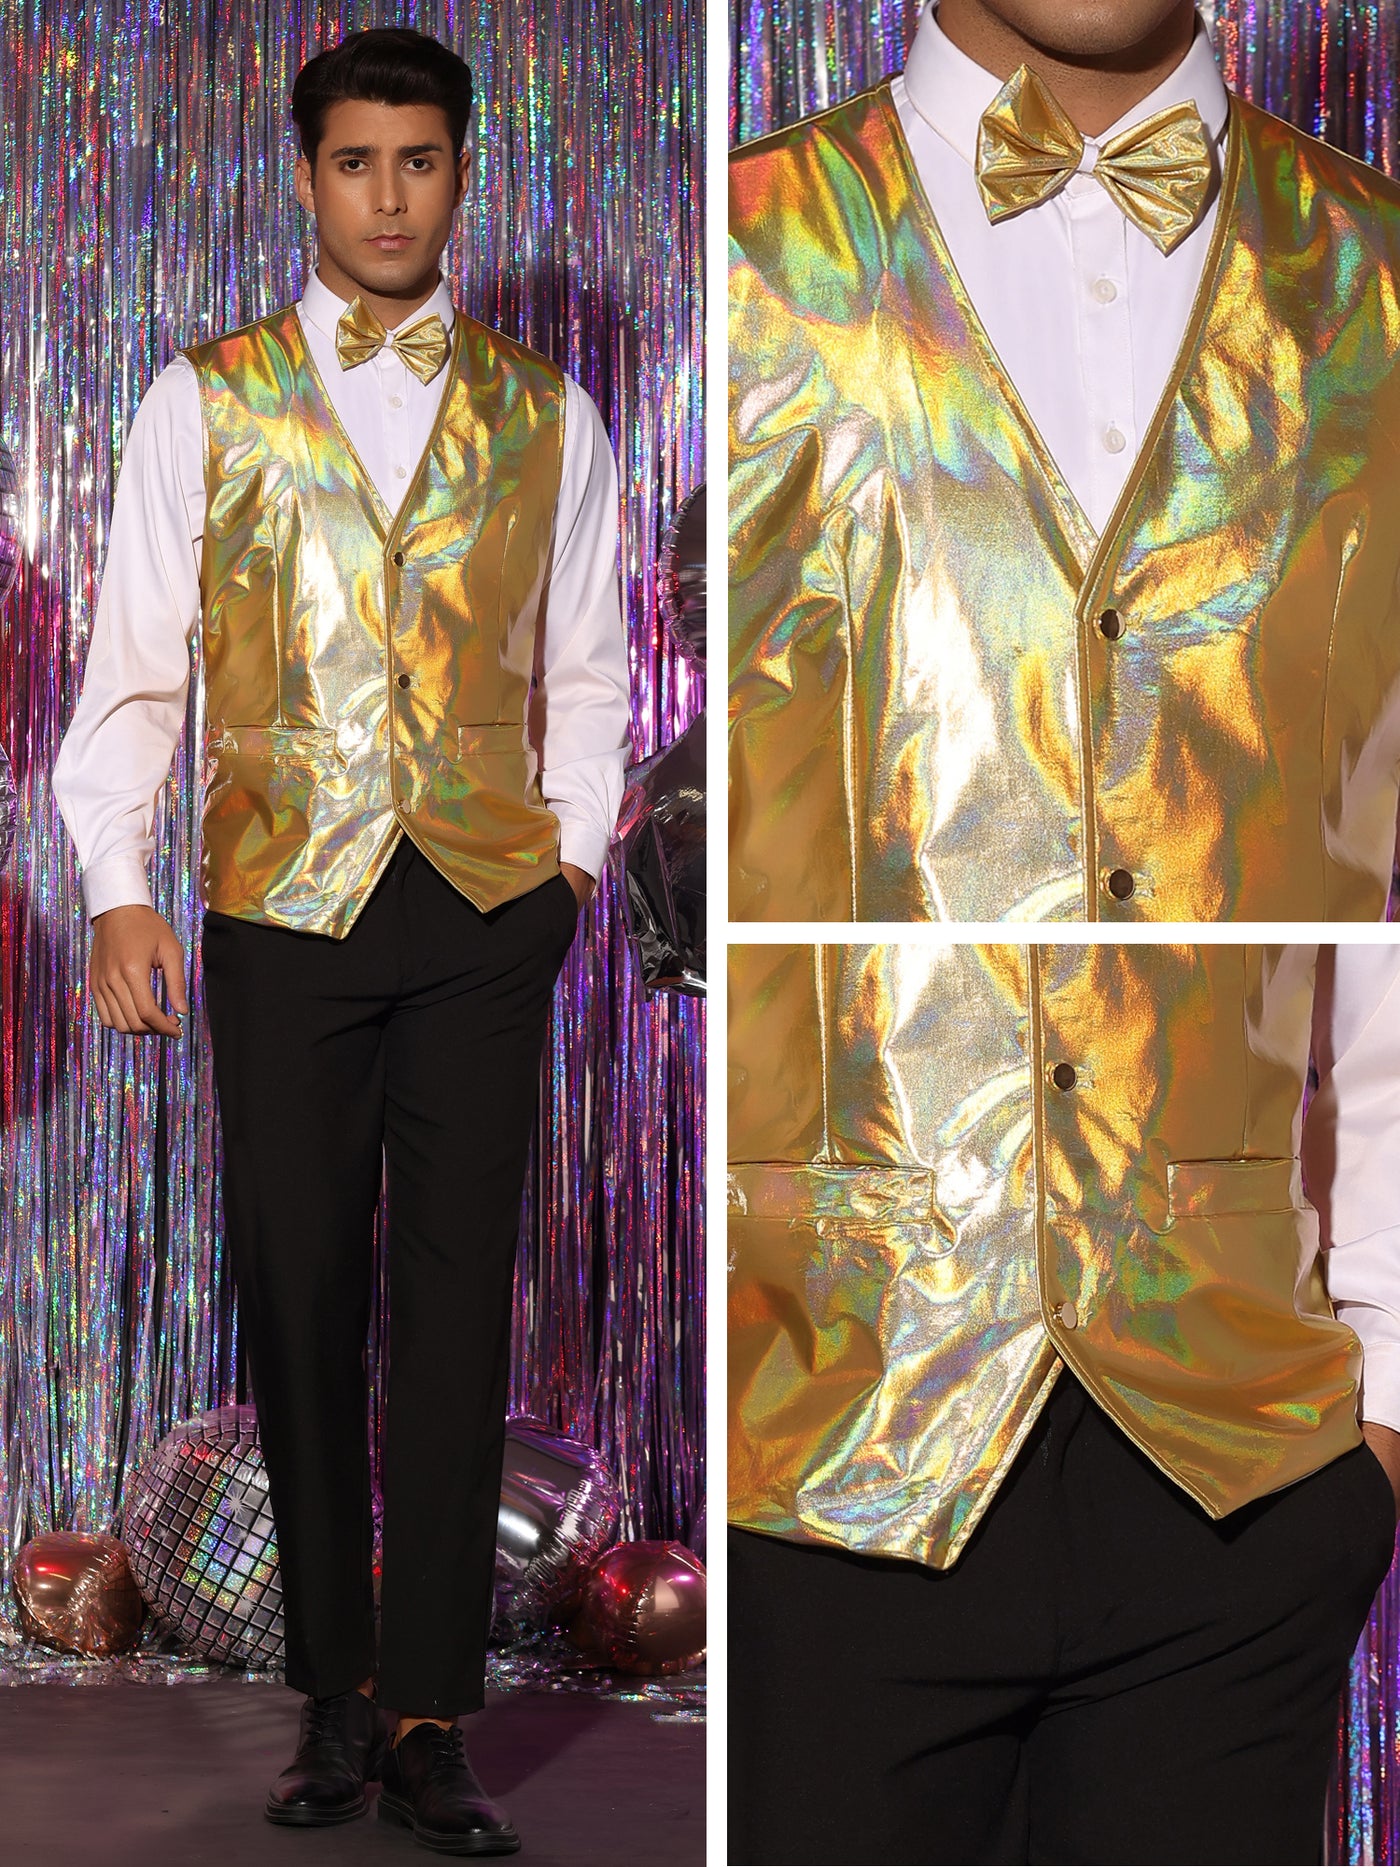 Bublédon Metallic Vest for Men's V-Neck Sleeveless Shiny Holographic Disco Party Waistcoat Bowtie